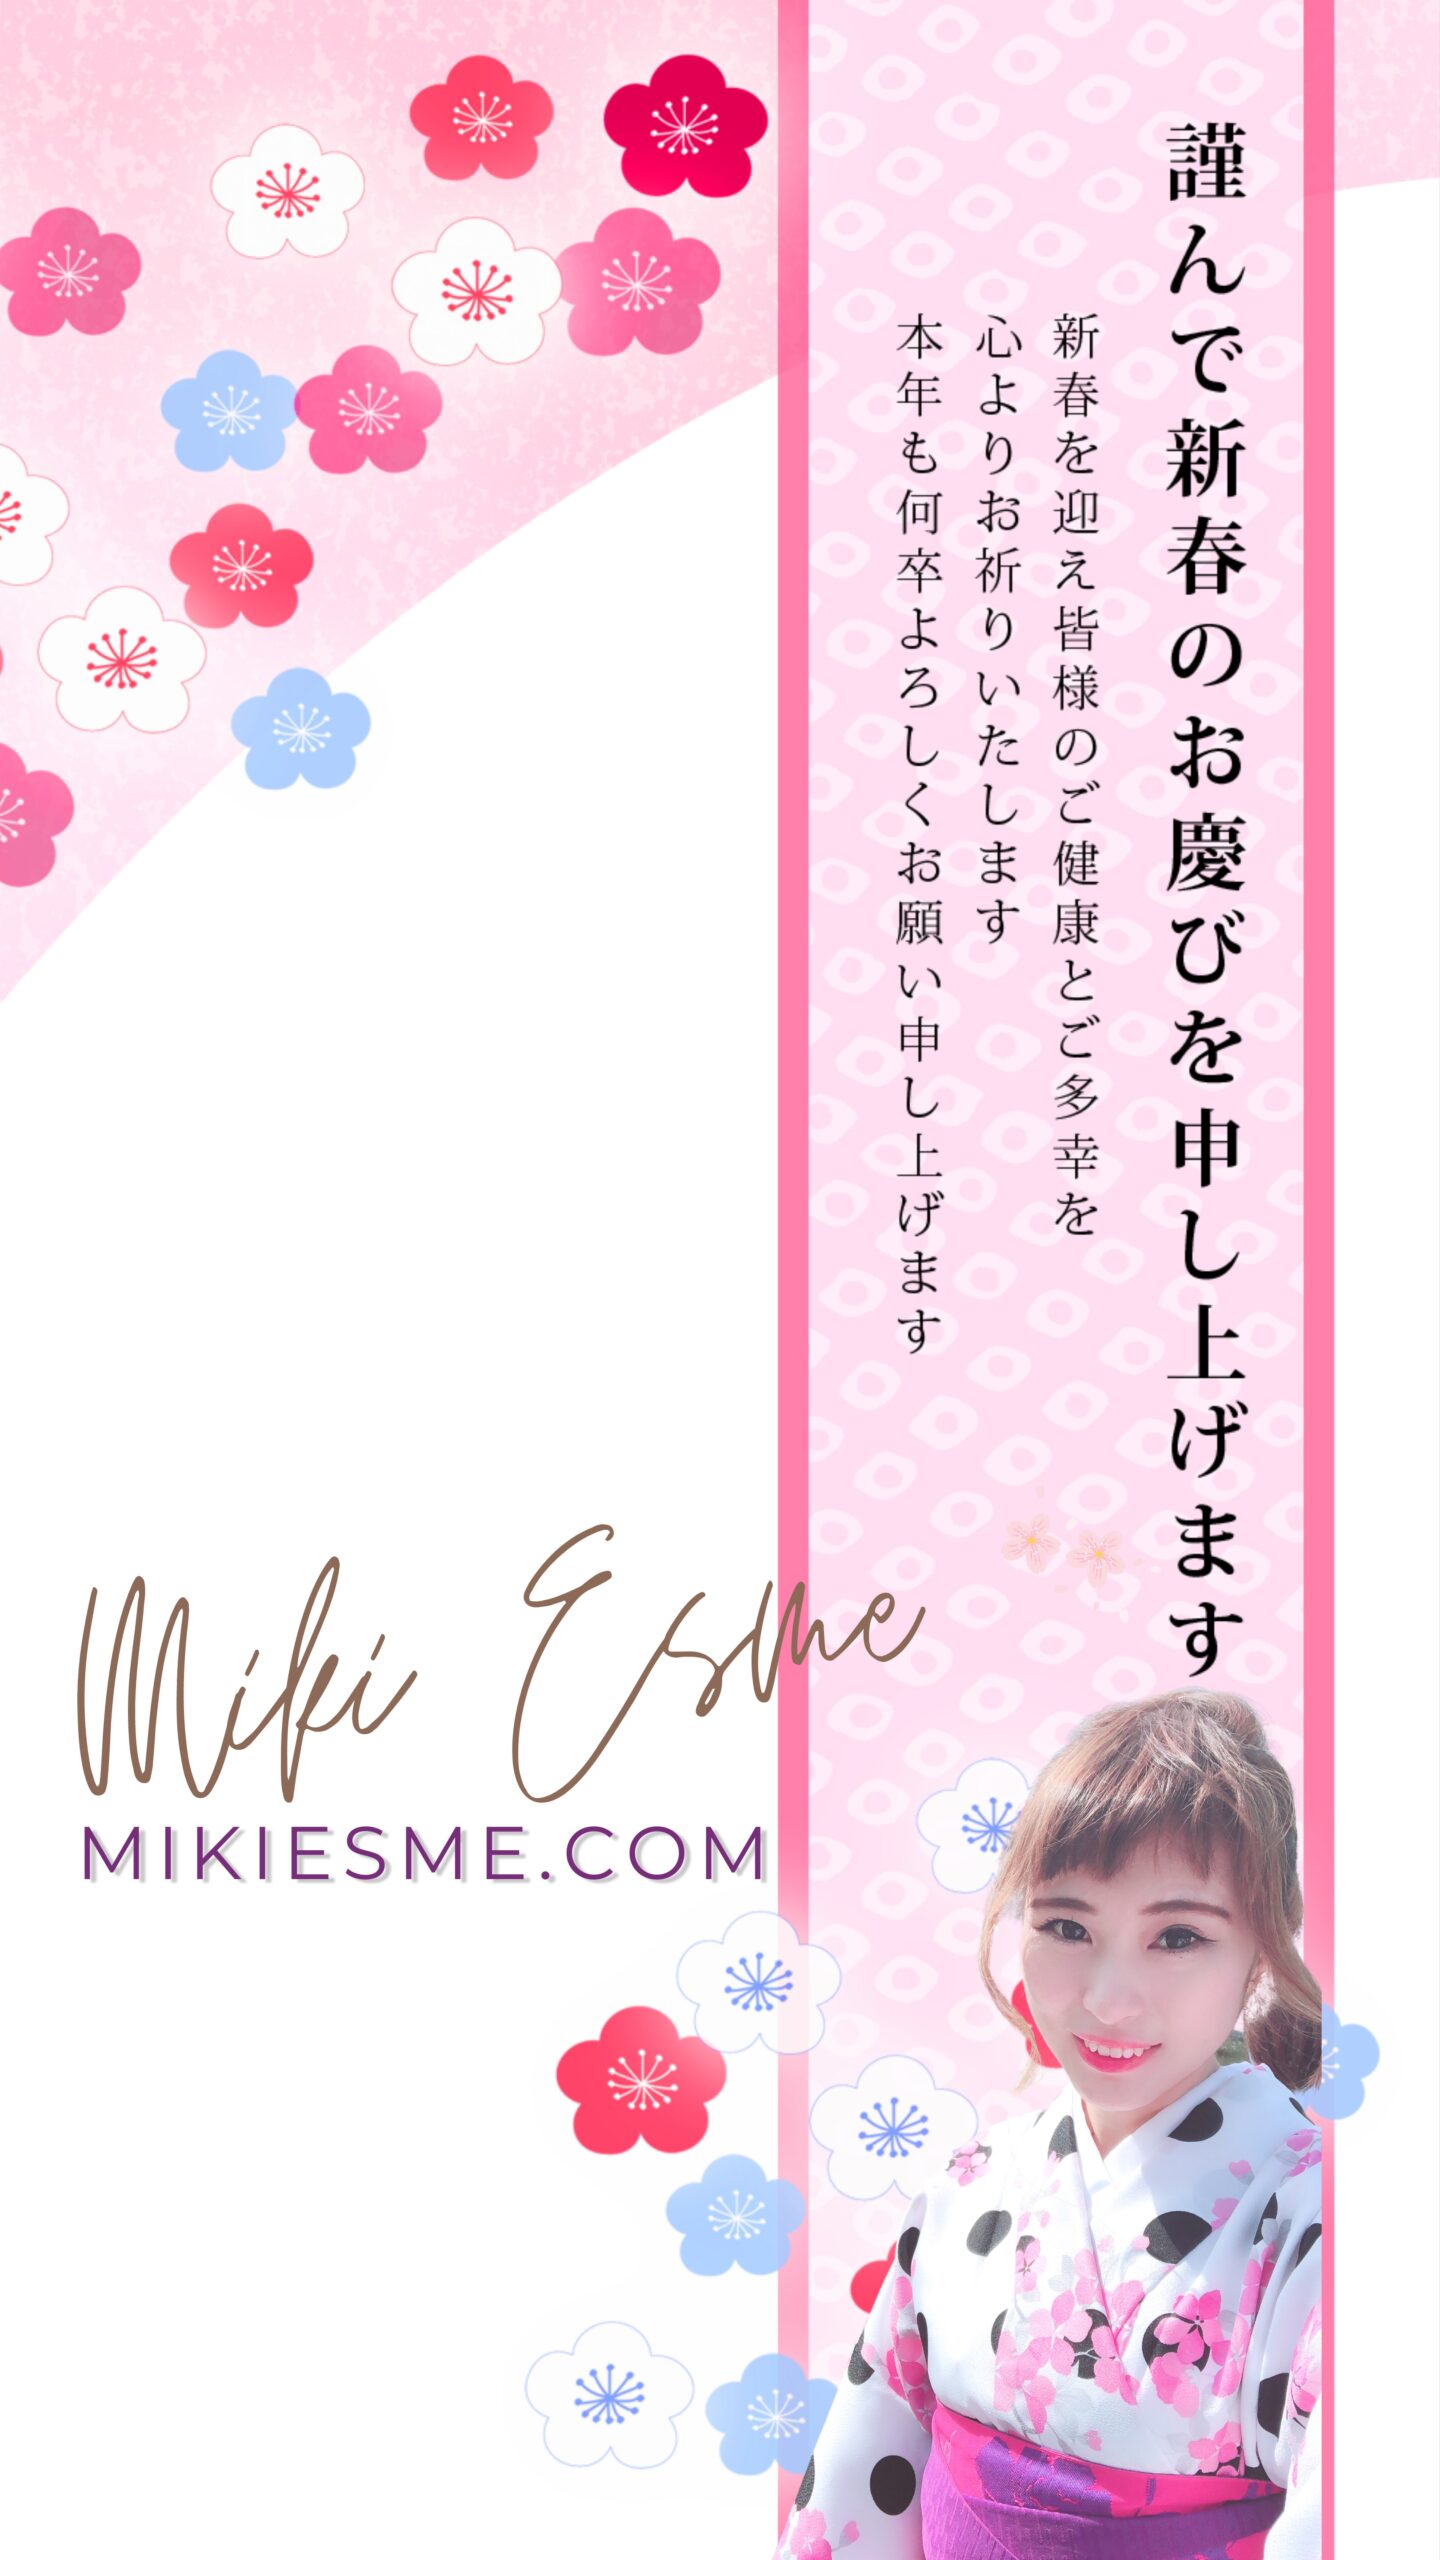 Happy New Year + Sweet greeting card Ideas(c)MikiEsme.com